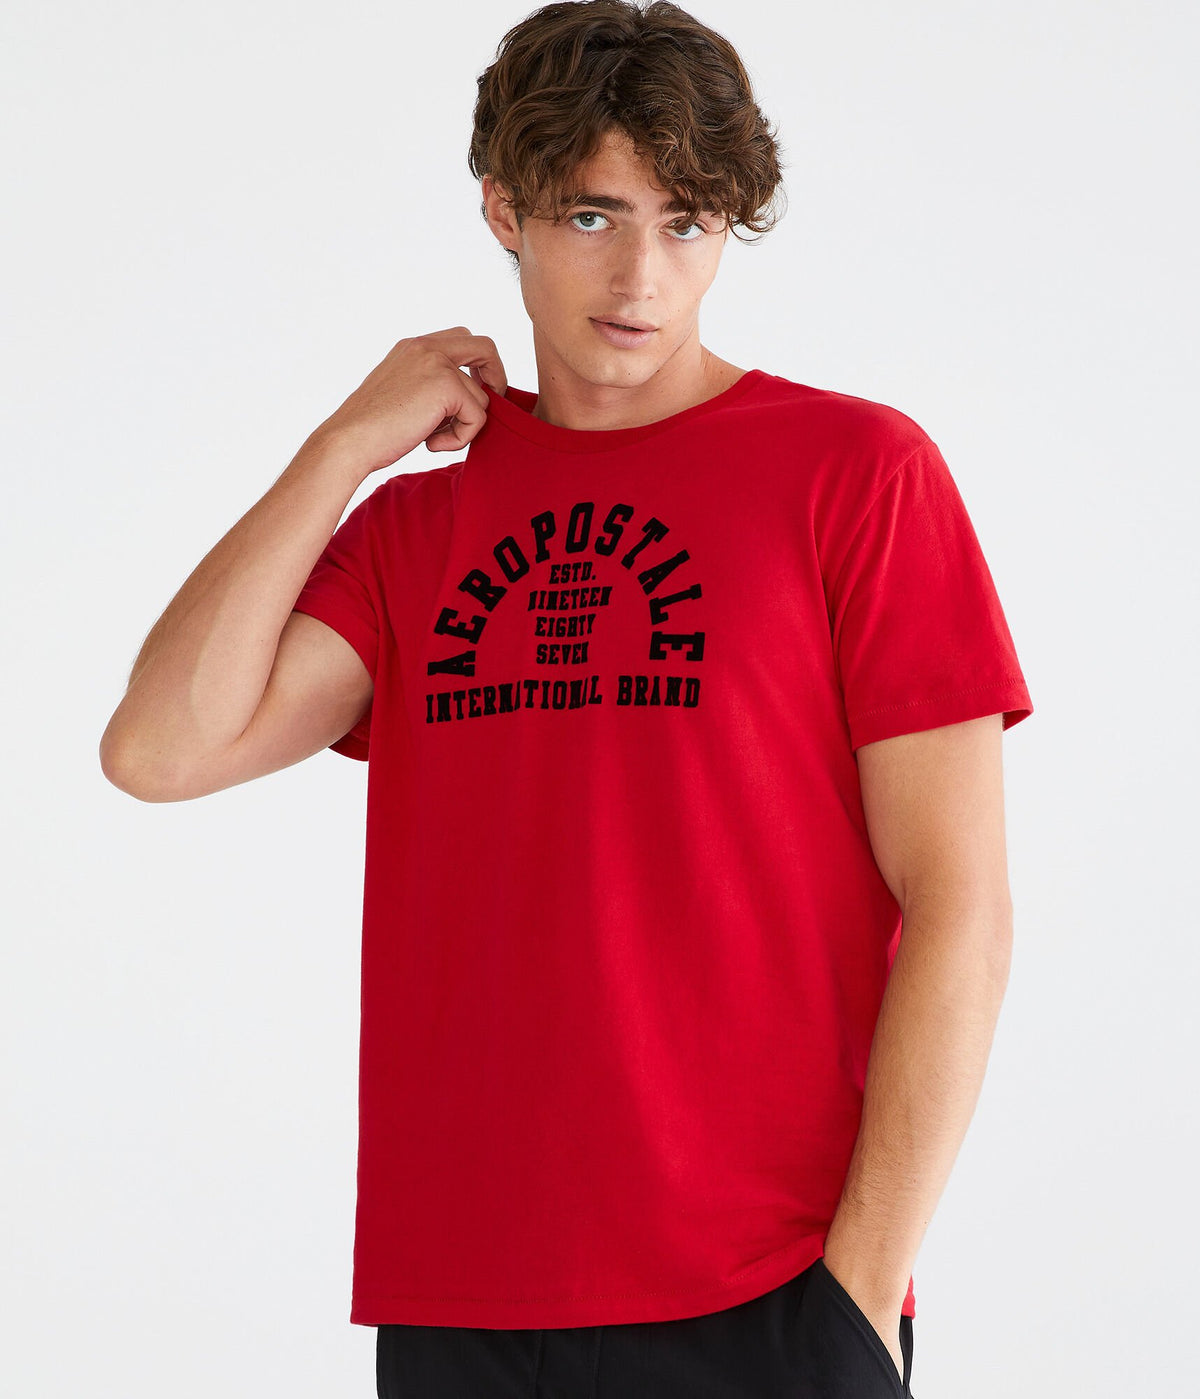 Aeropostale Mens' AEROPOSTALE ARCH - Red - Size L - Cotton - Teen Fashion & Clothing Grenadine